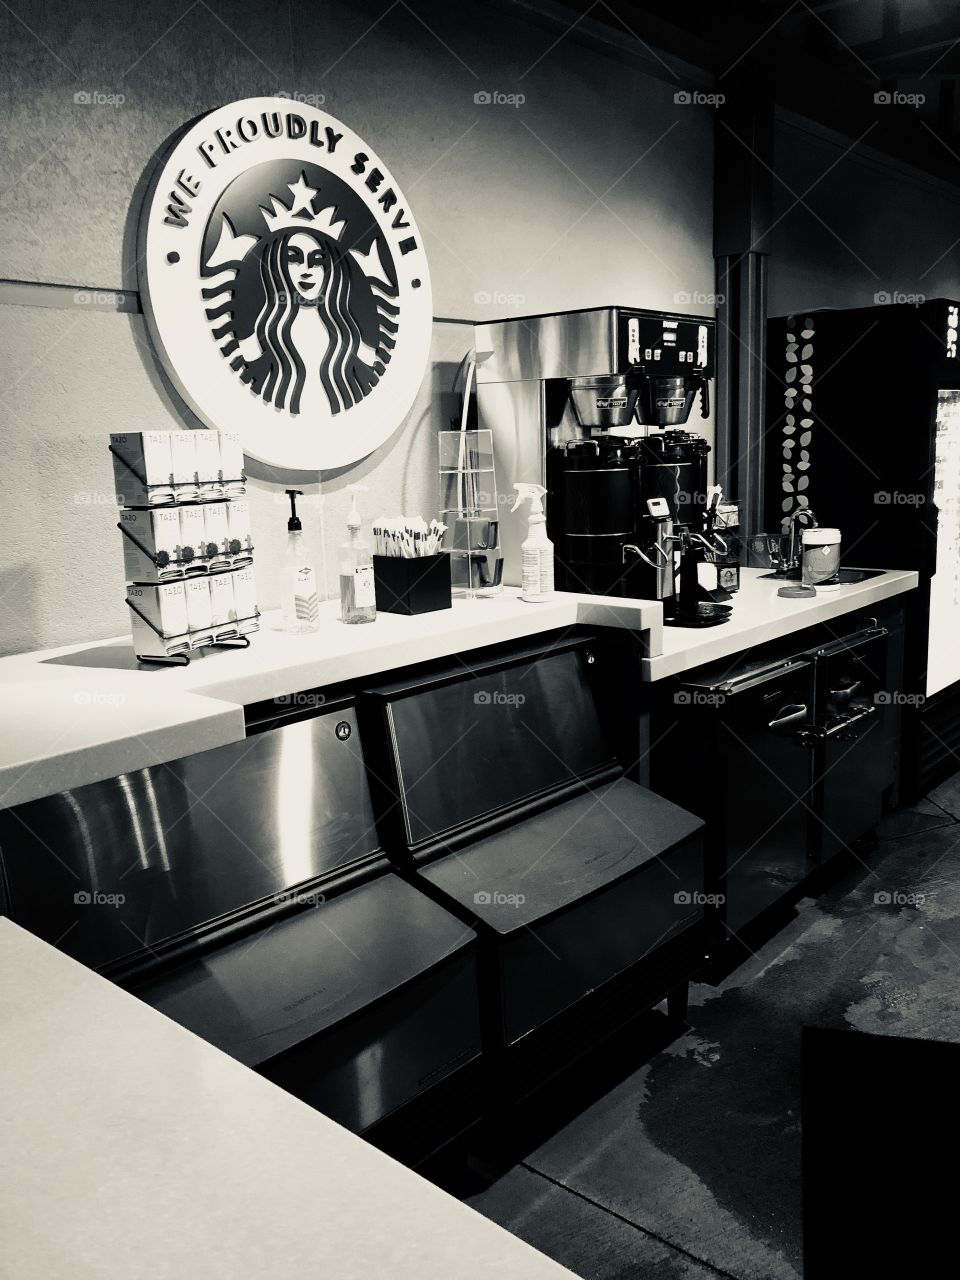 Starbucks at Universal Studios Orlando 